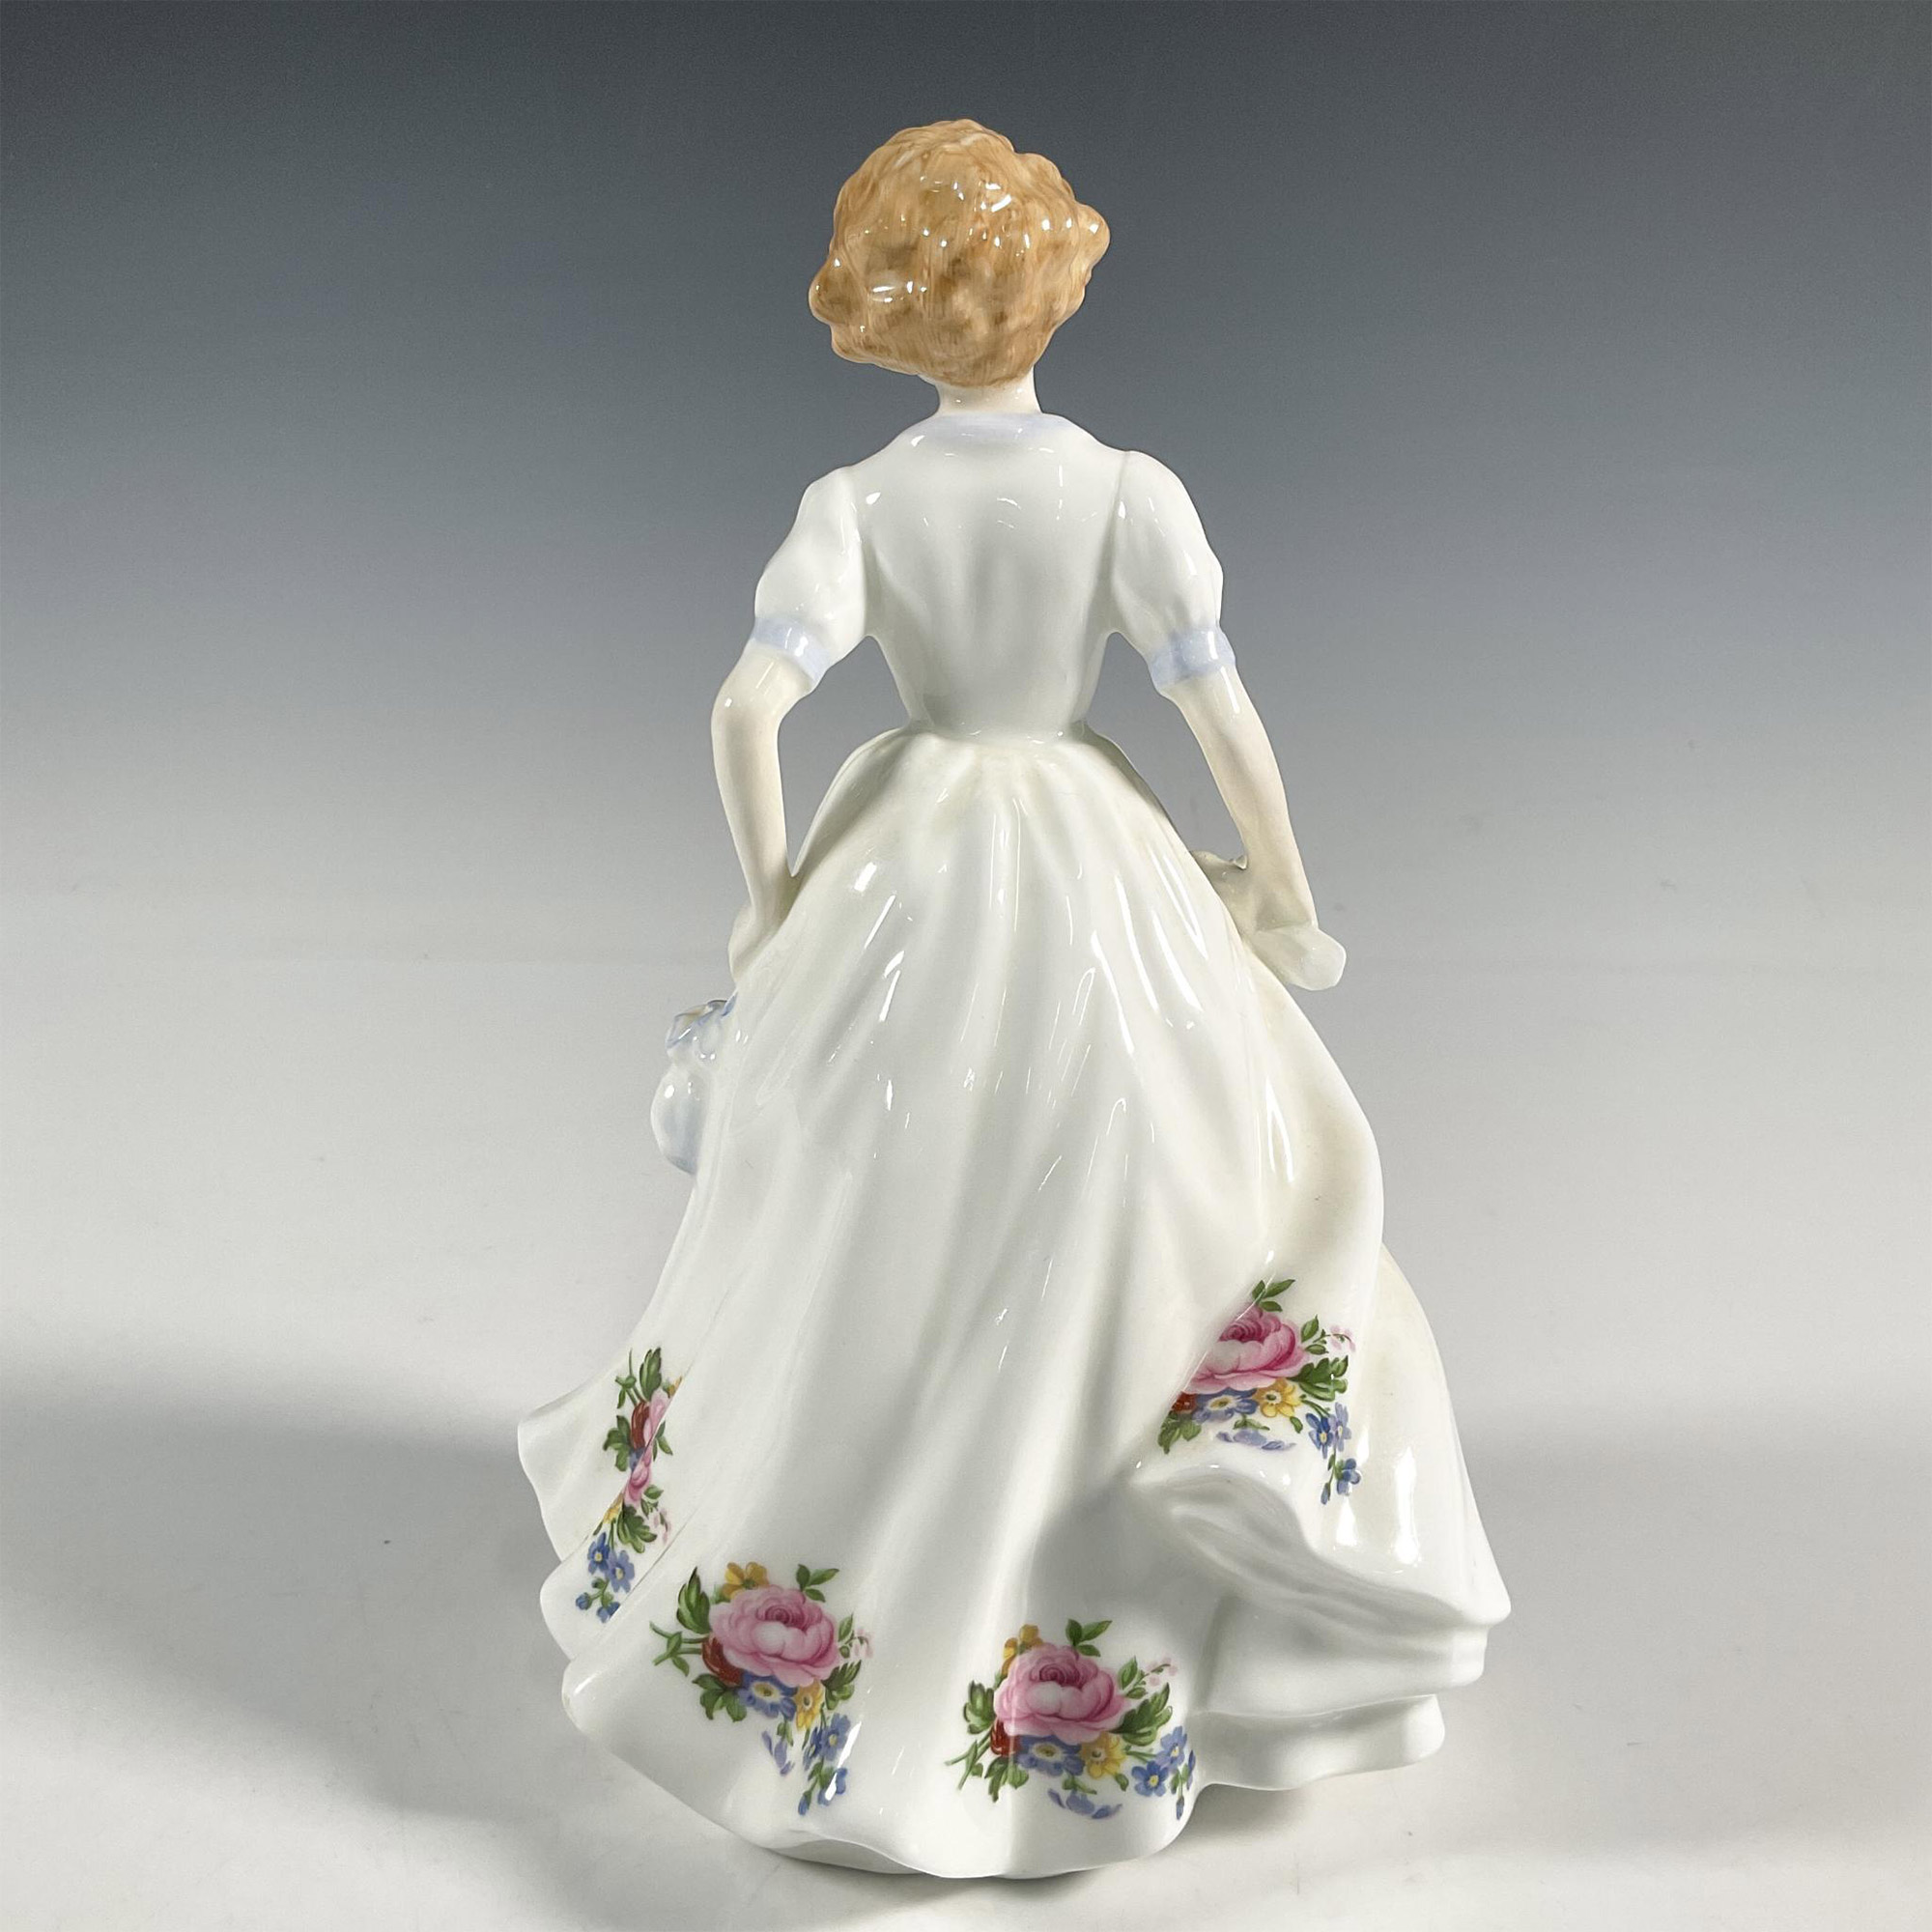 Louise HN3888 - Royal Doulton Figurine - Image 2 of 3